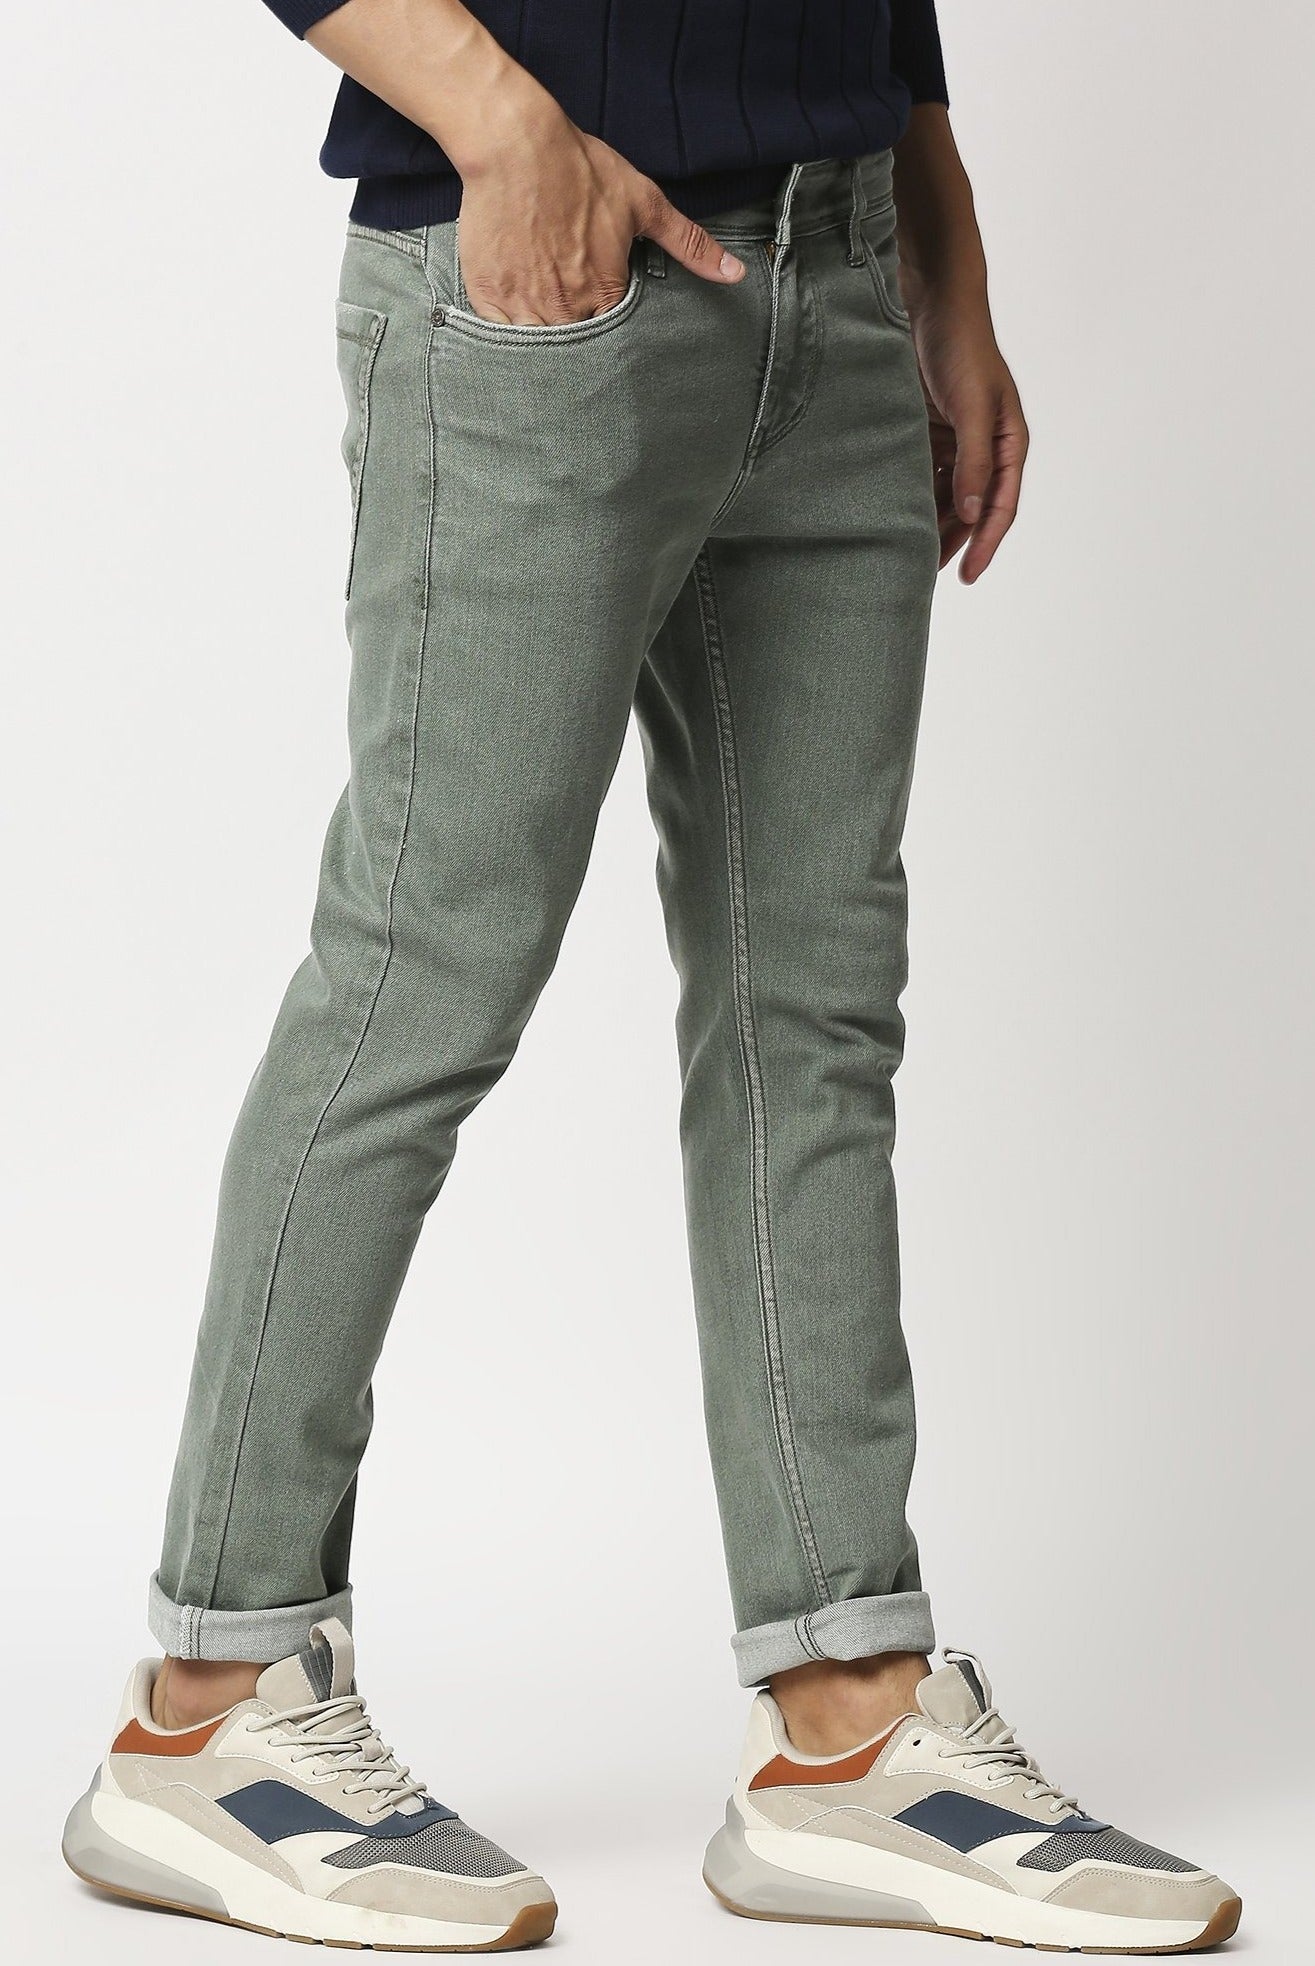 Fostino Straight Leg Jean In OLIVE - Fostino - Jeans